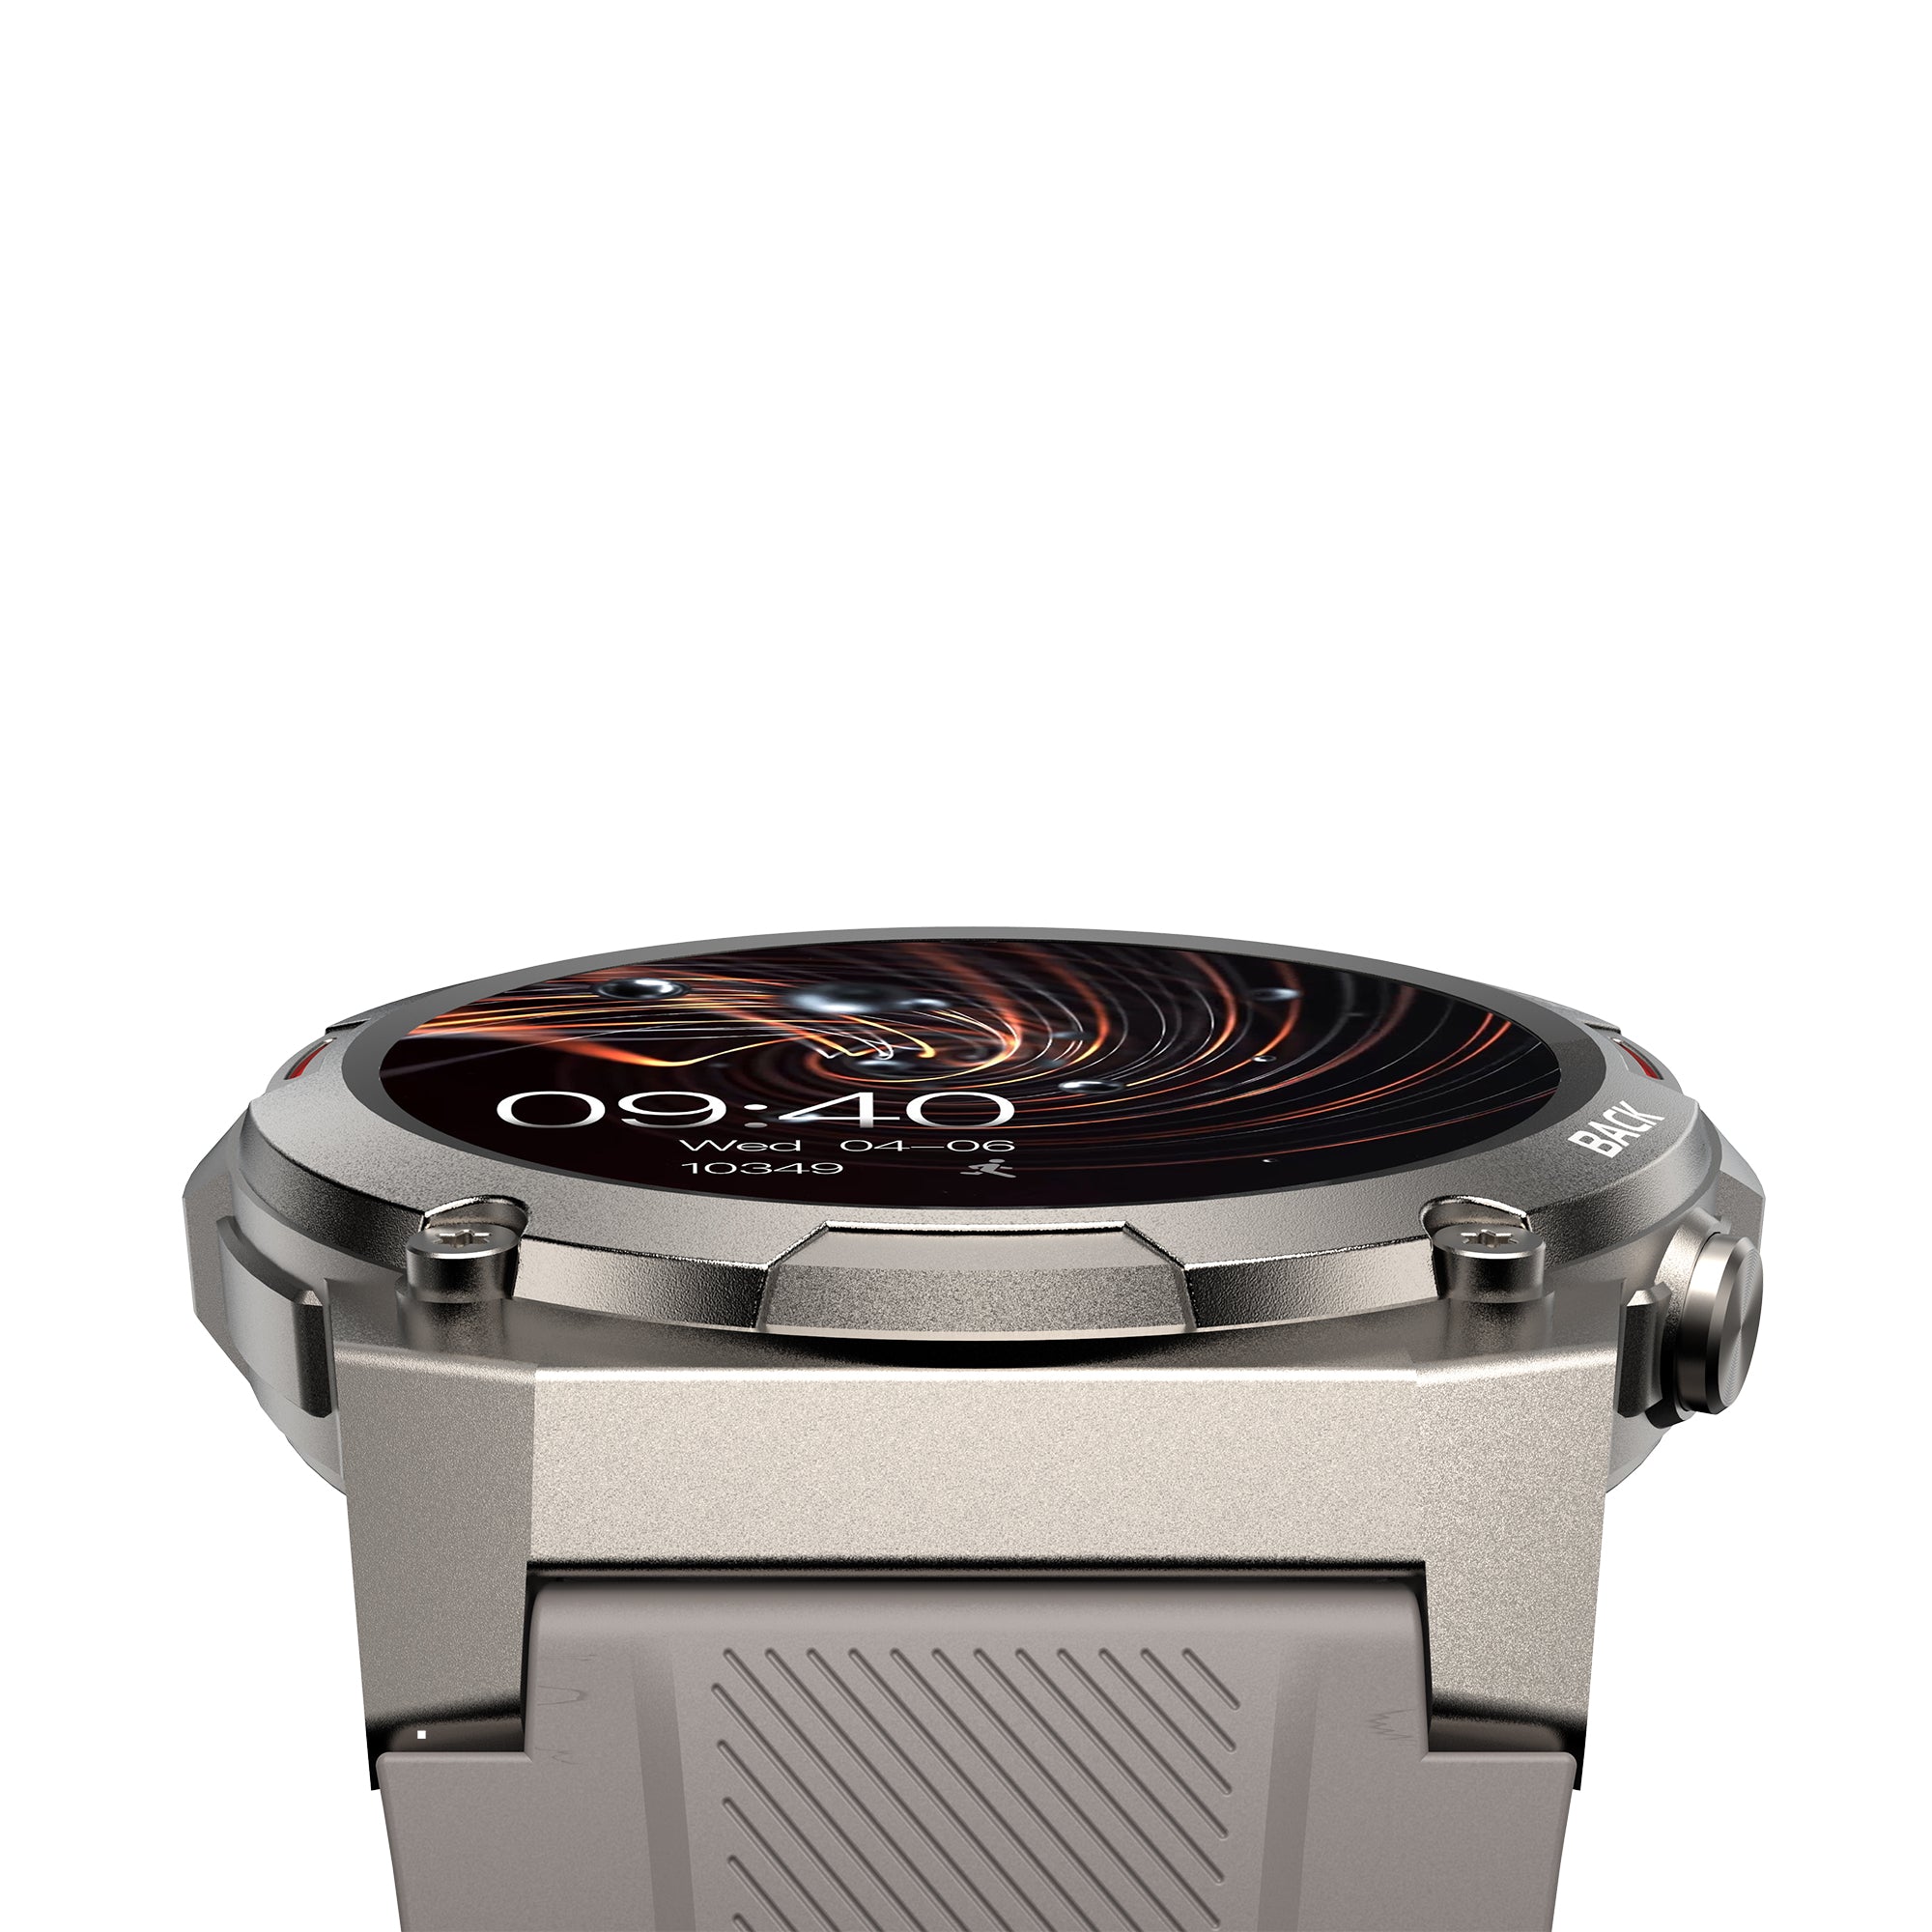 FutureGo Mix2 - AMOLED Wireless Calling Smartwatch – HiFuture